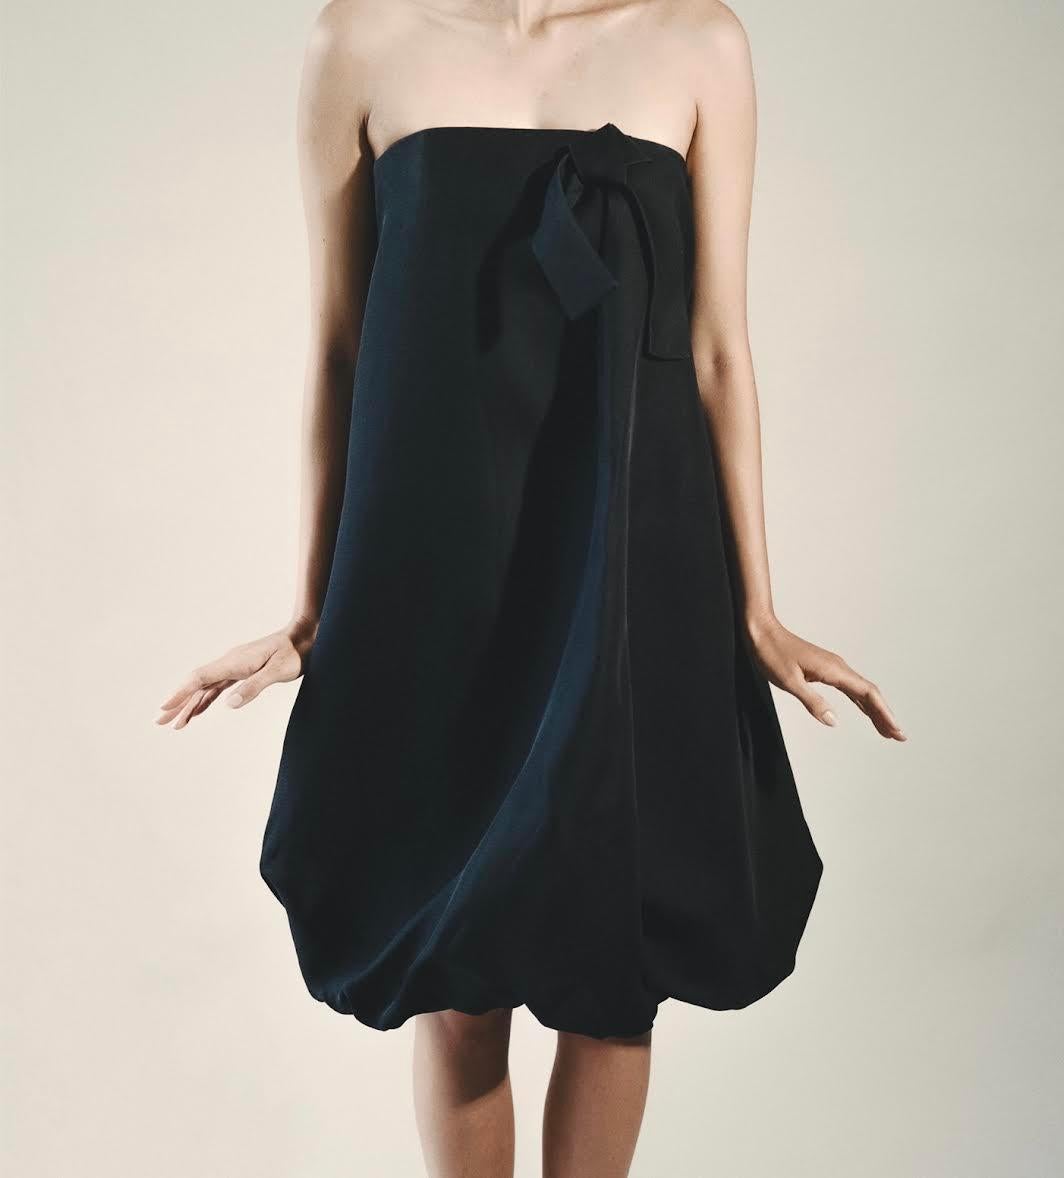 Balenciaga Le Dix by Josephus Thimister Silk Gazar Dress In Good Condition For Sale In Brooklyn, NY